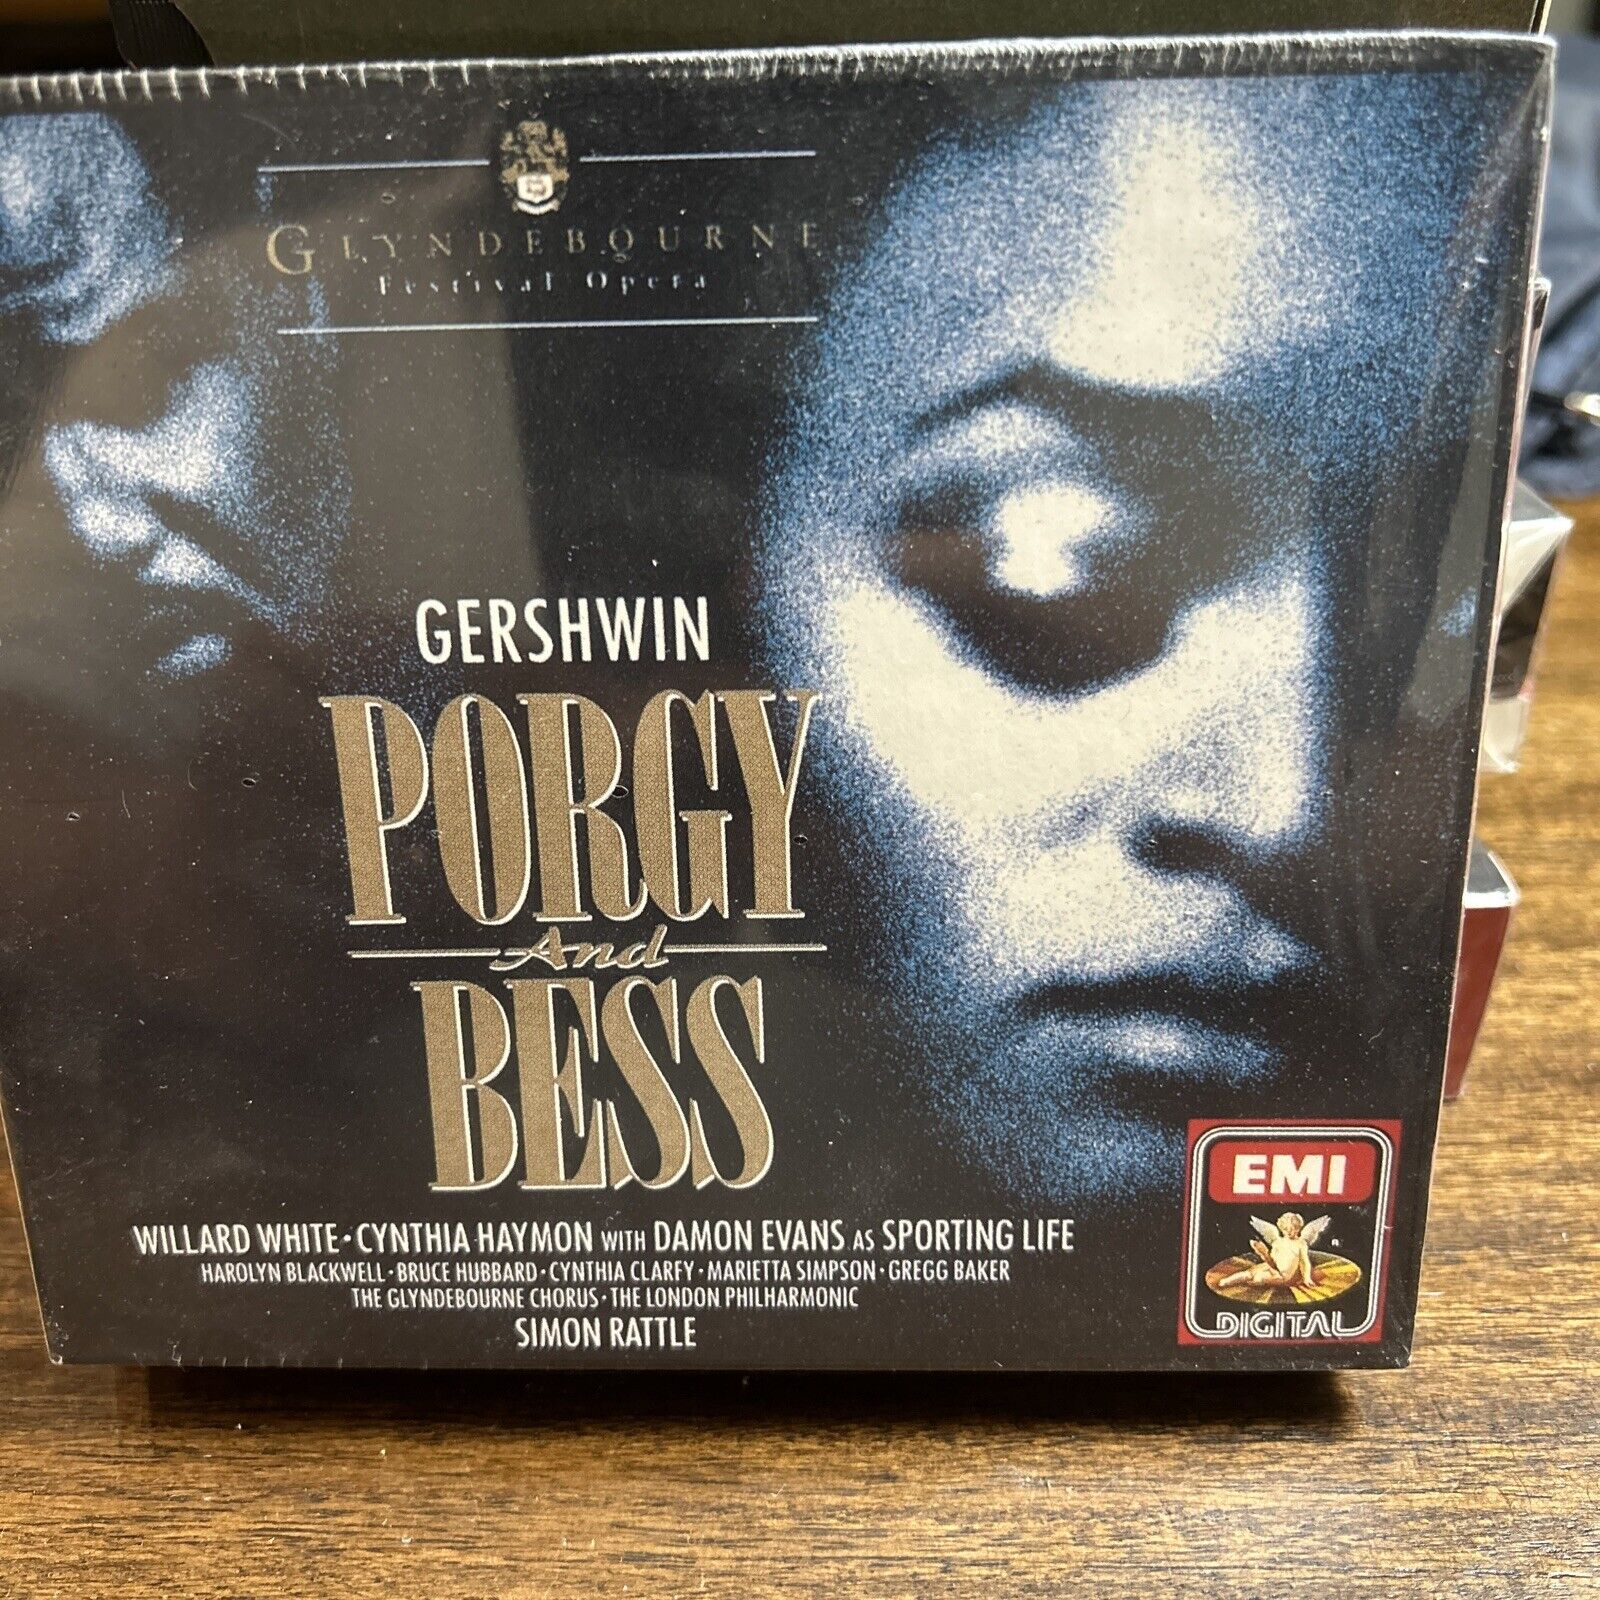 GEORGE GERSHWIN - Porgy & Bess (CD, COMPLETE Recording 1988 3-Disc Glyndebourne)